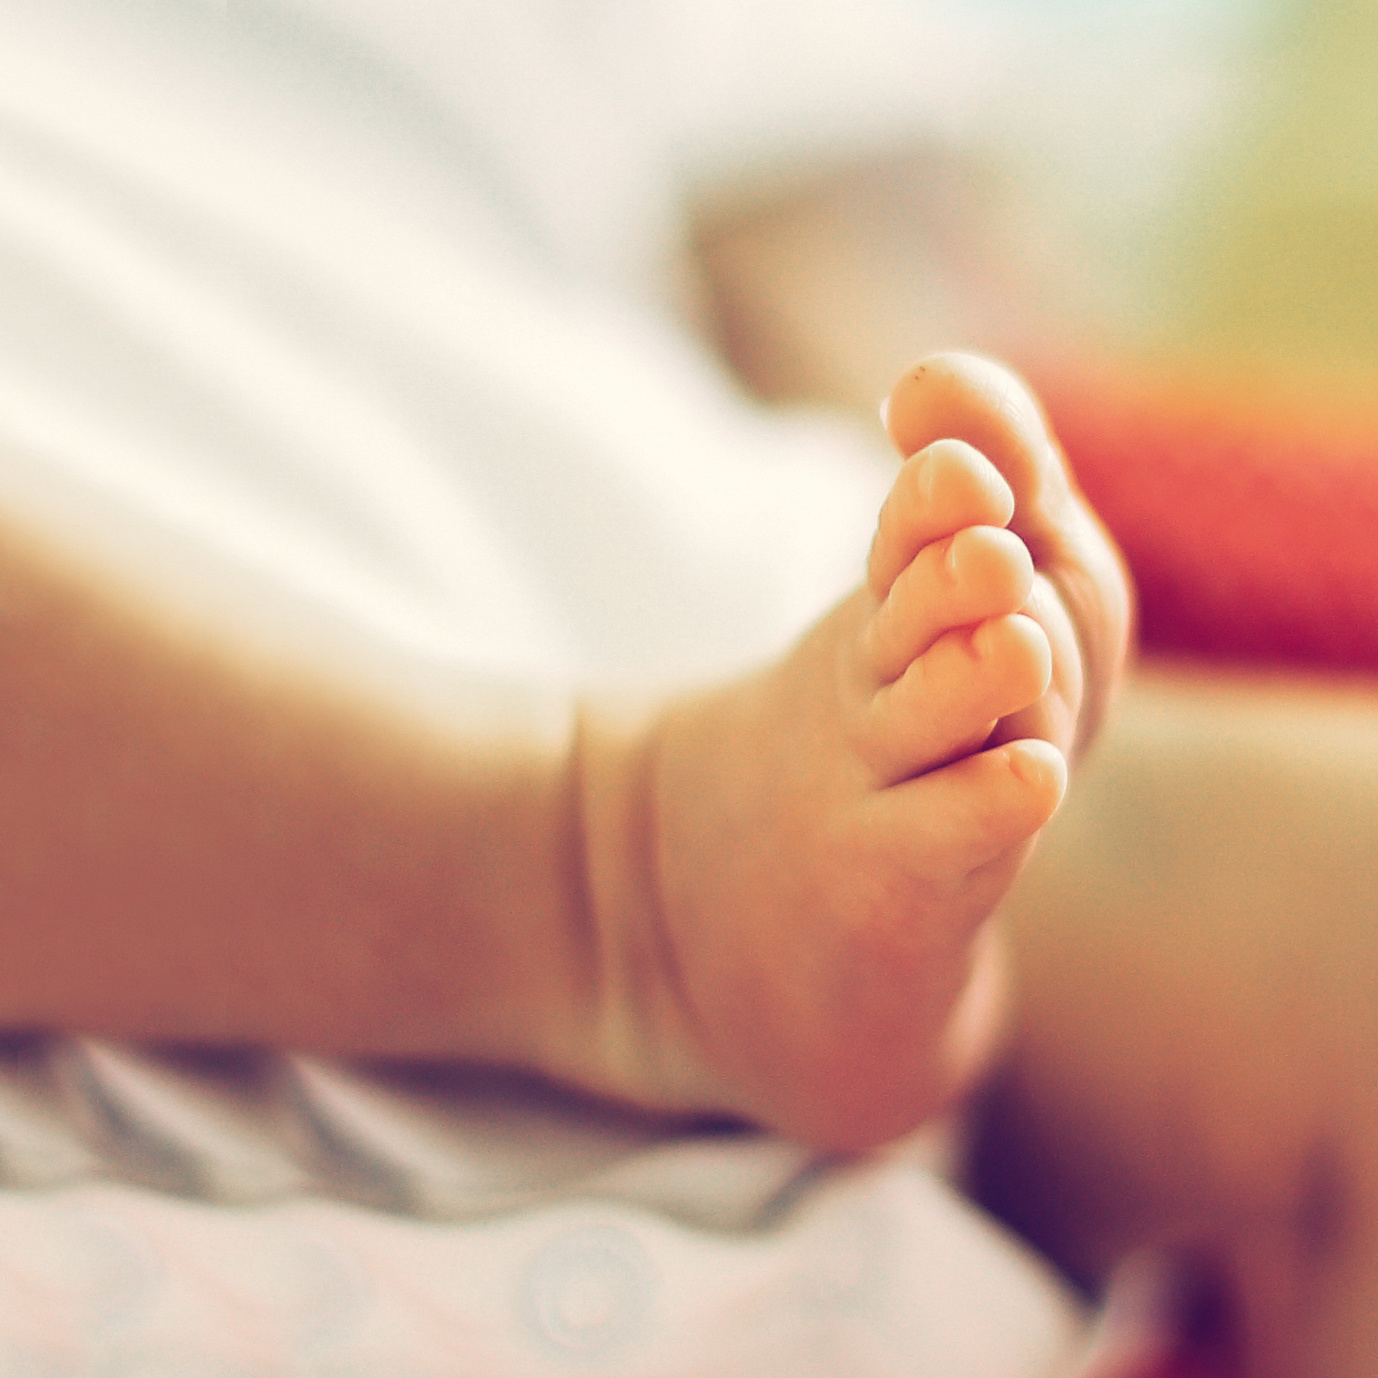 newborn sleep tips - photo of a newborn foot on the edge of a blanket